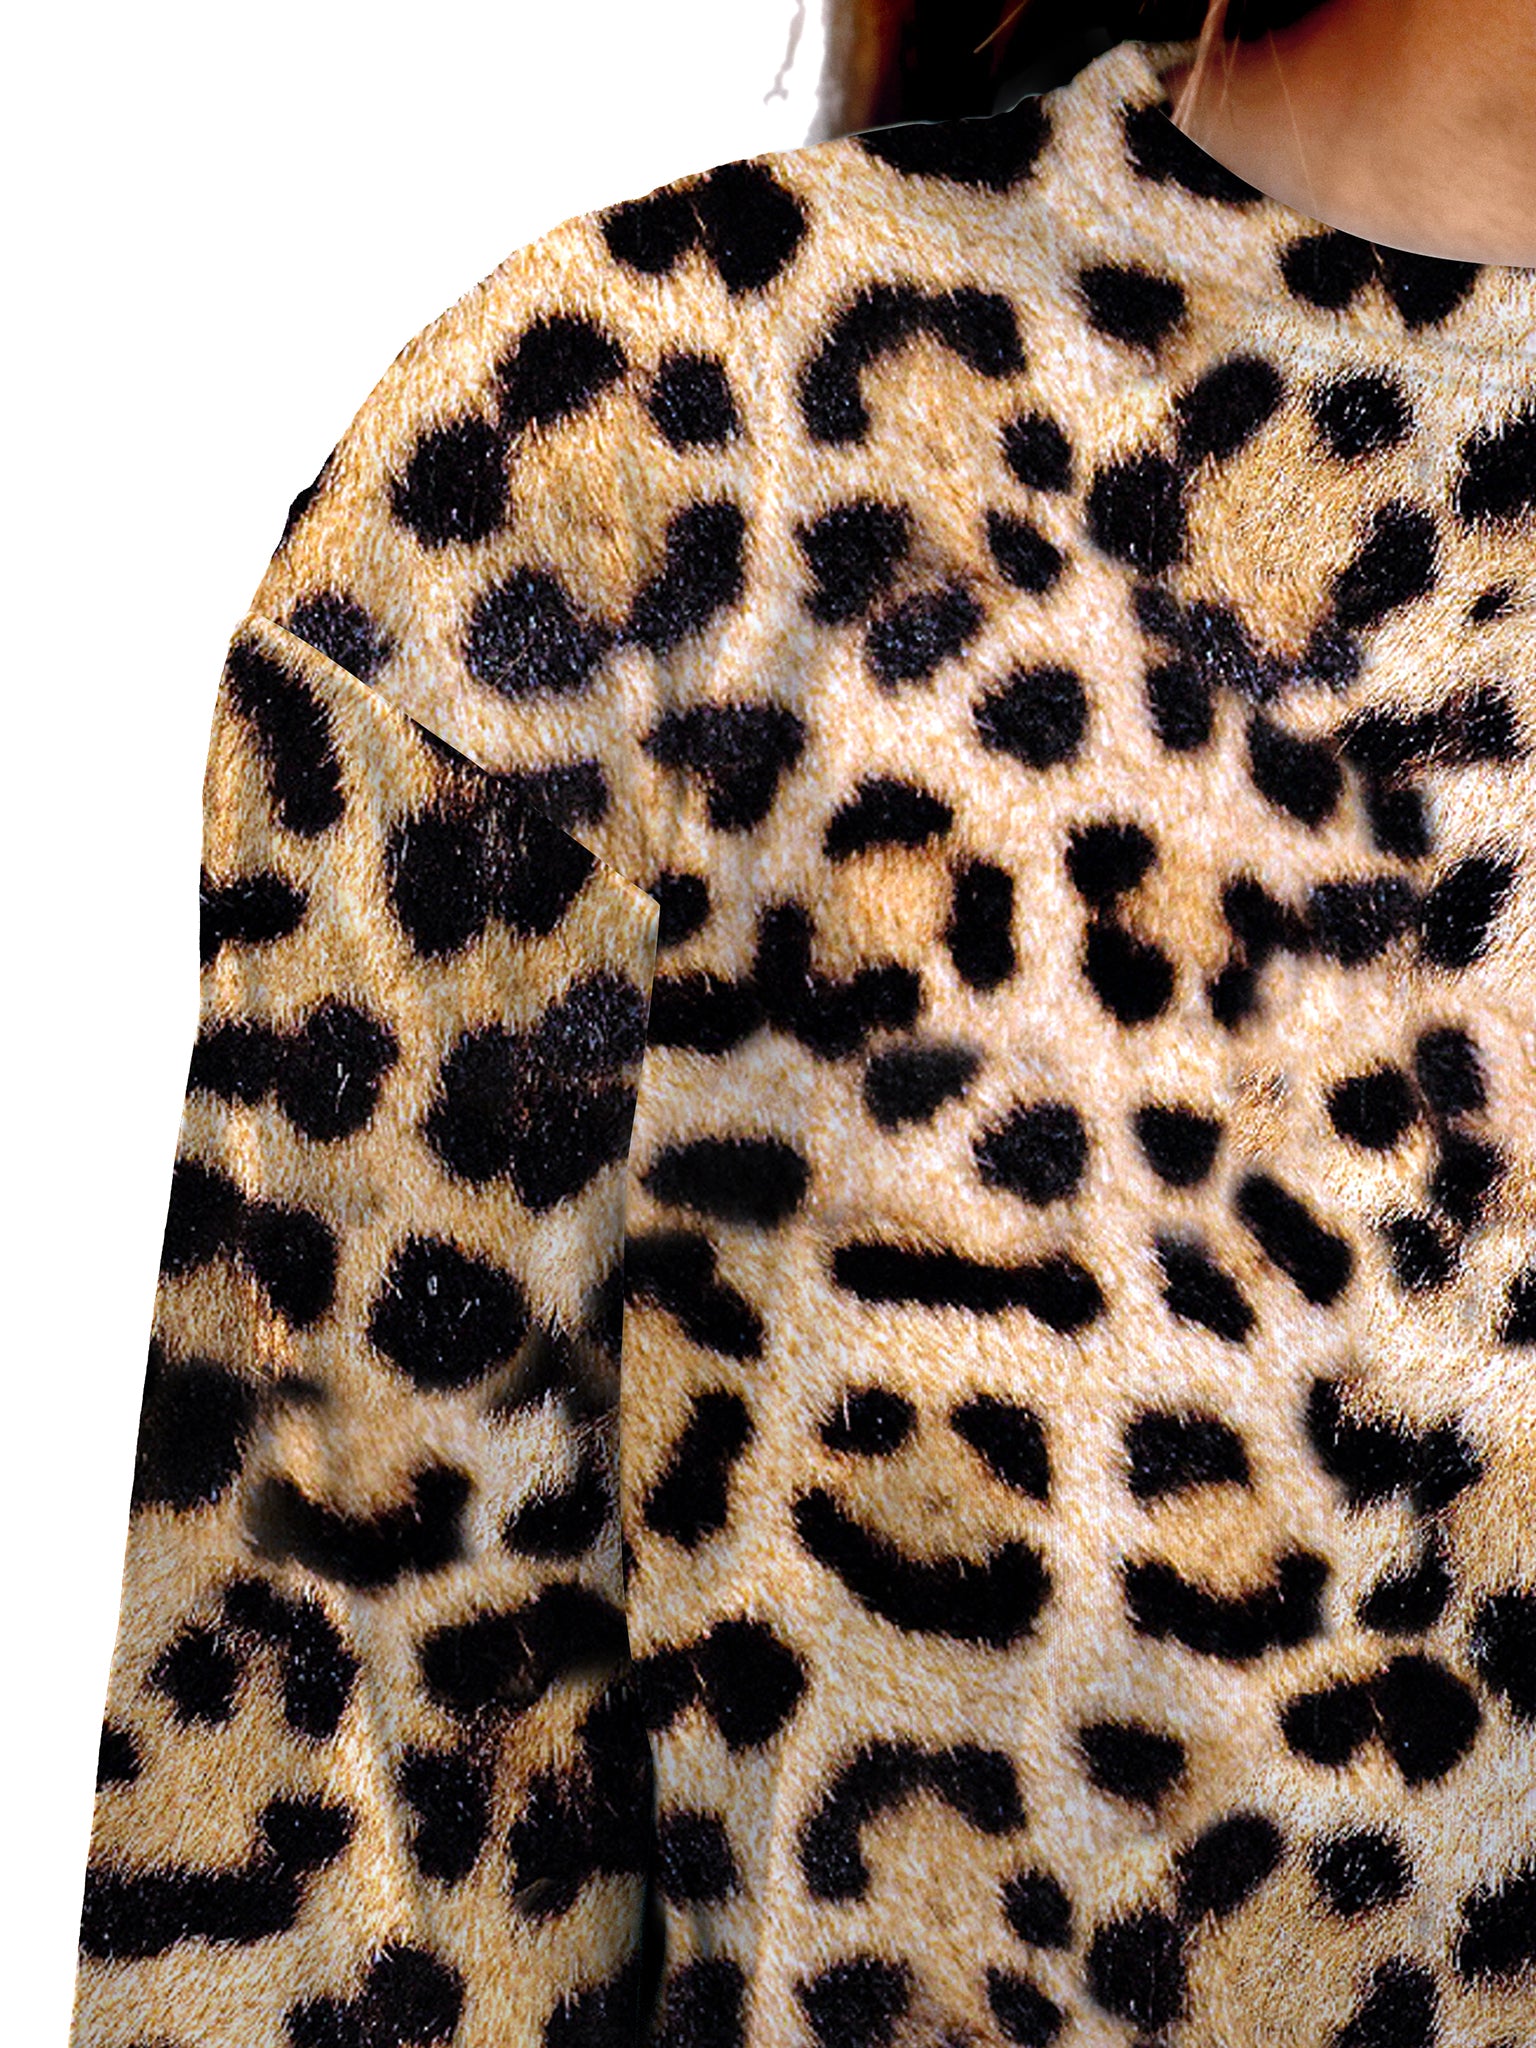 Yellowish Brown Leopard Skin Printed Top